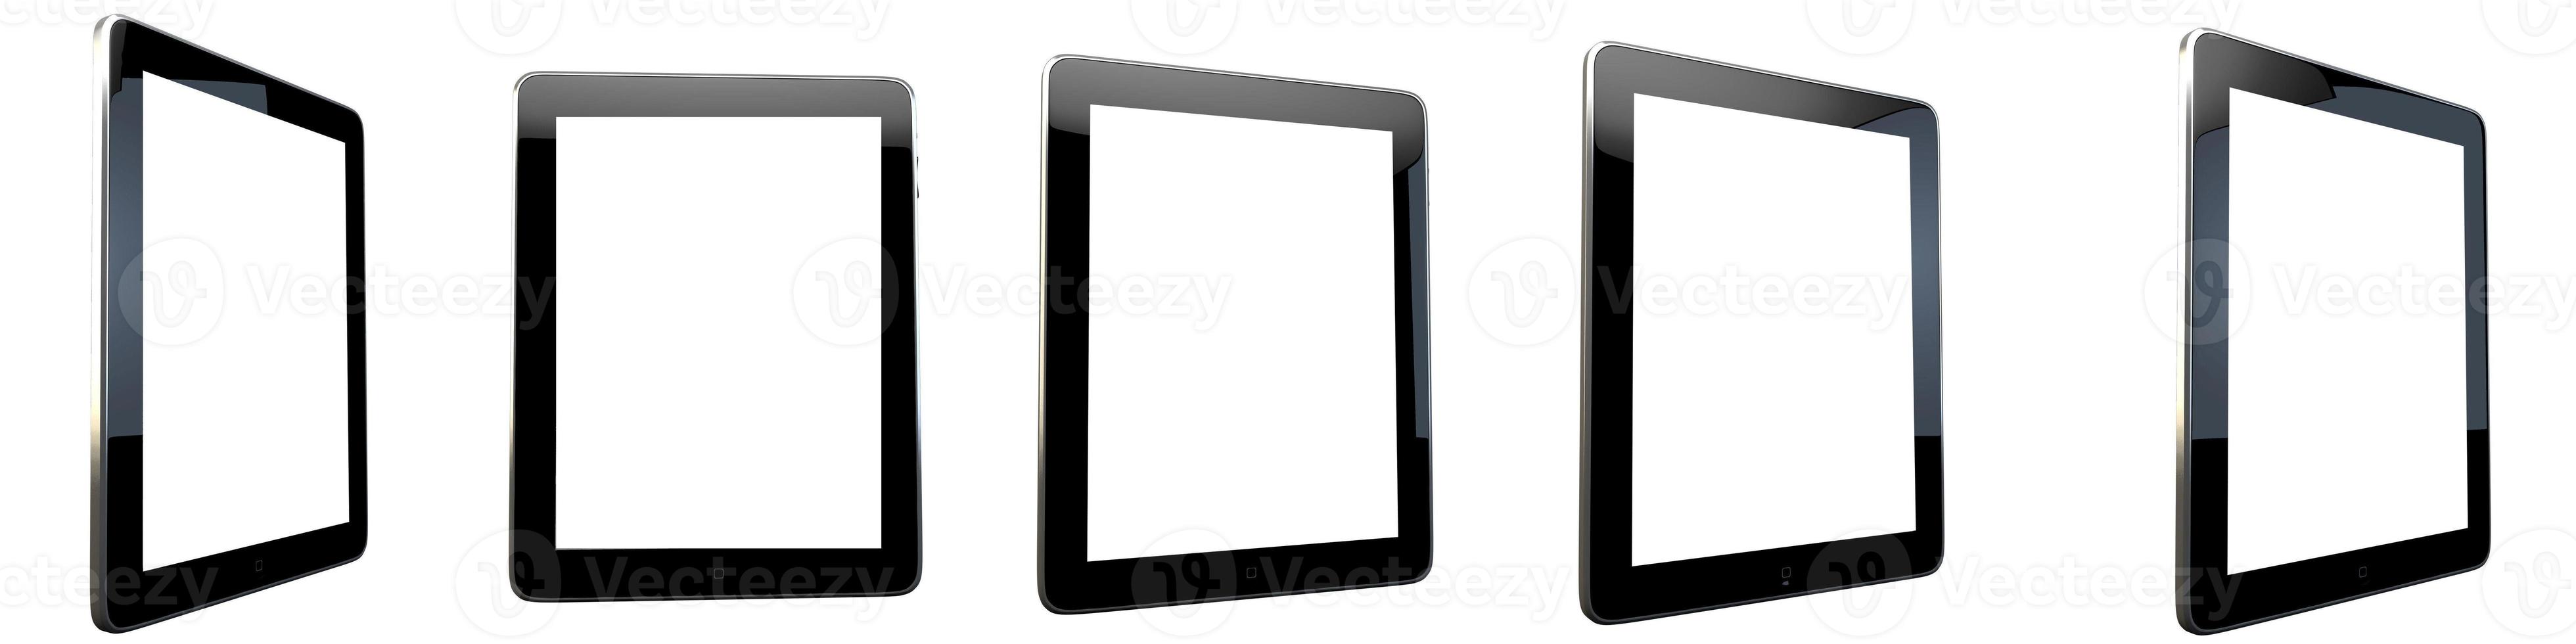 Tablet PC con pantalla en blanco aislado sobre fondo blanco. representación 3d foto